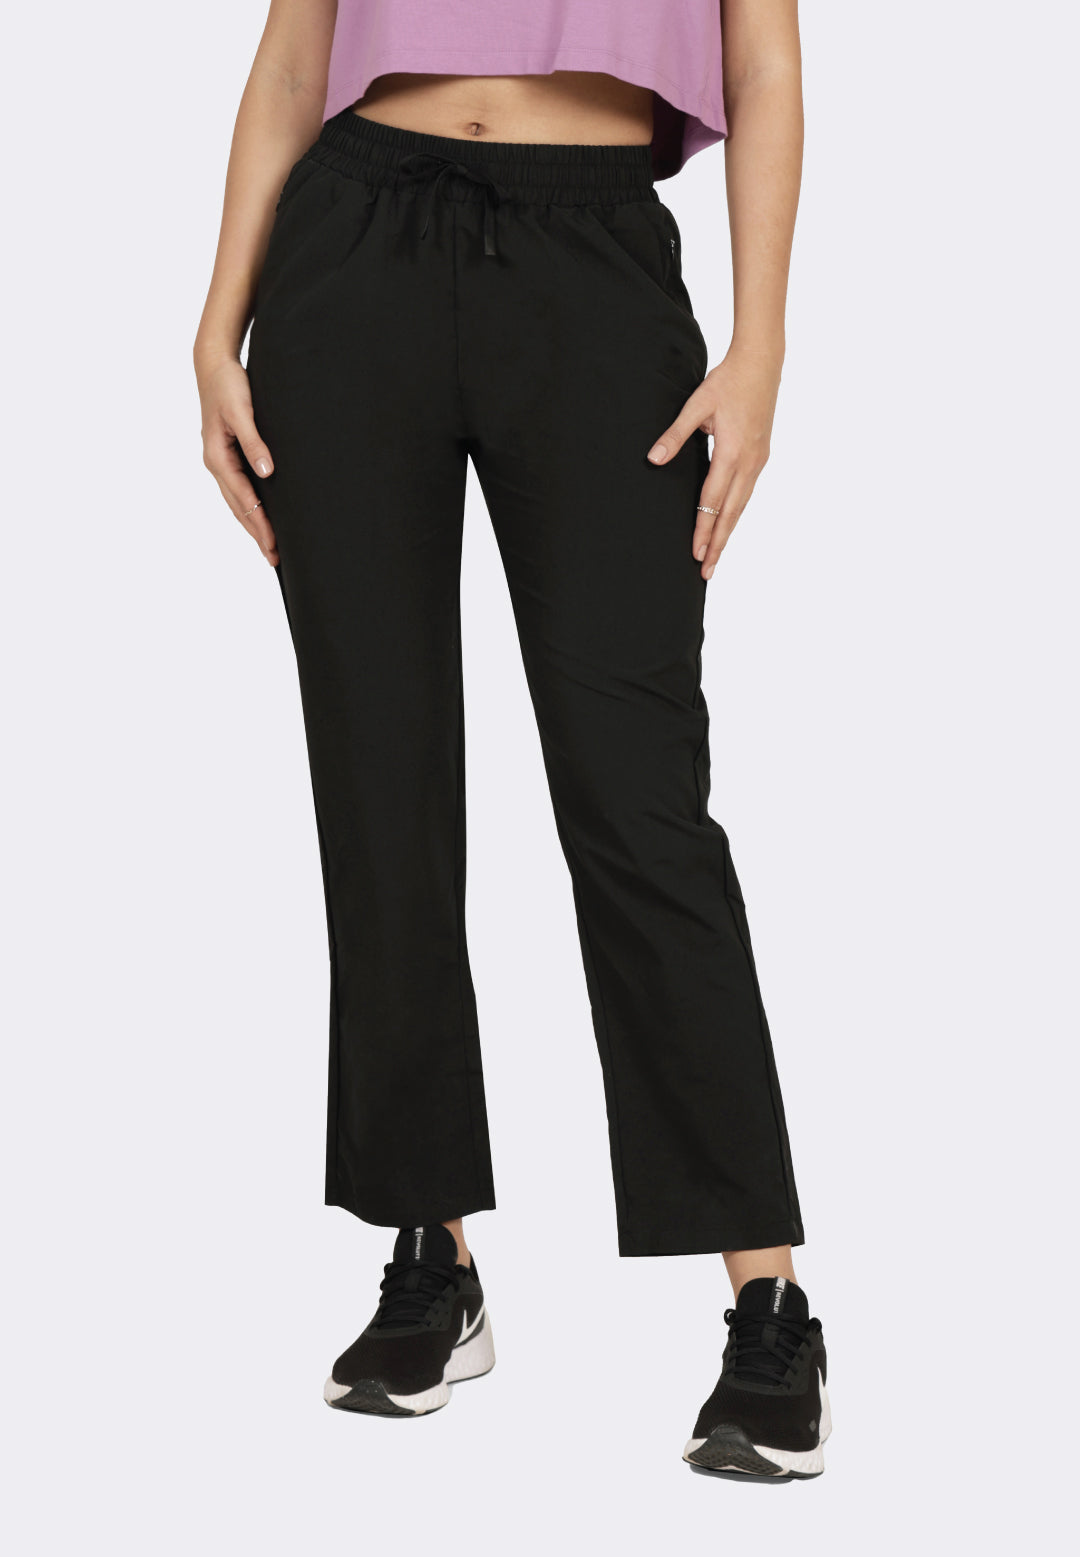 Women Pants - Shop Pants for Ladies & Women Online from Blissclub